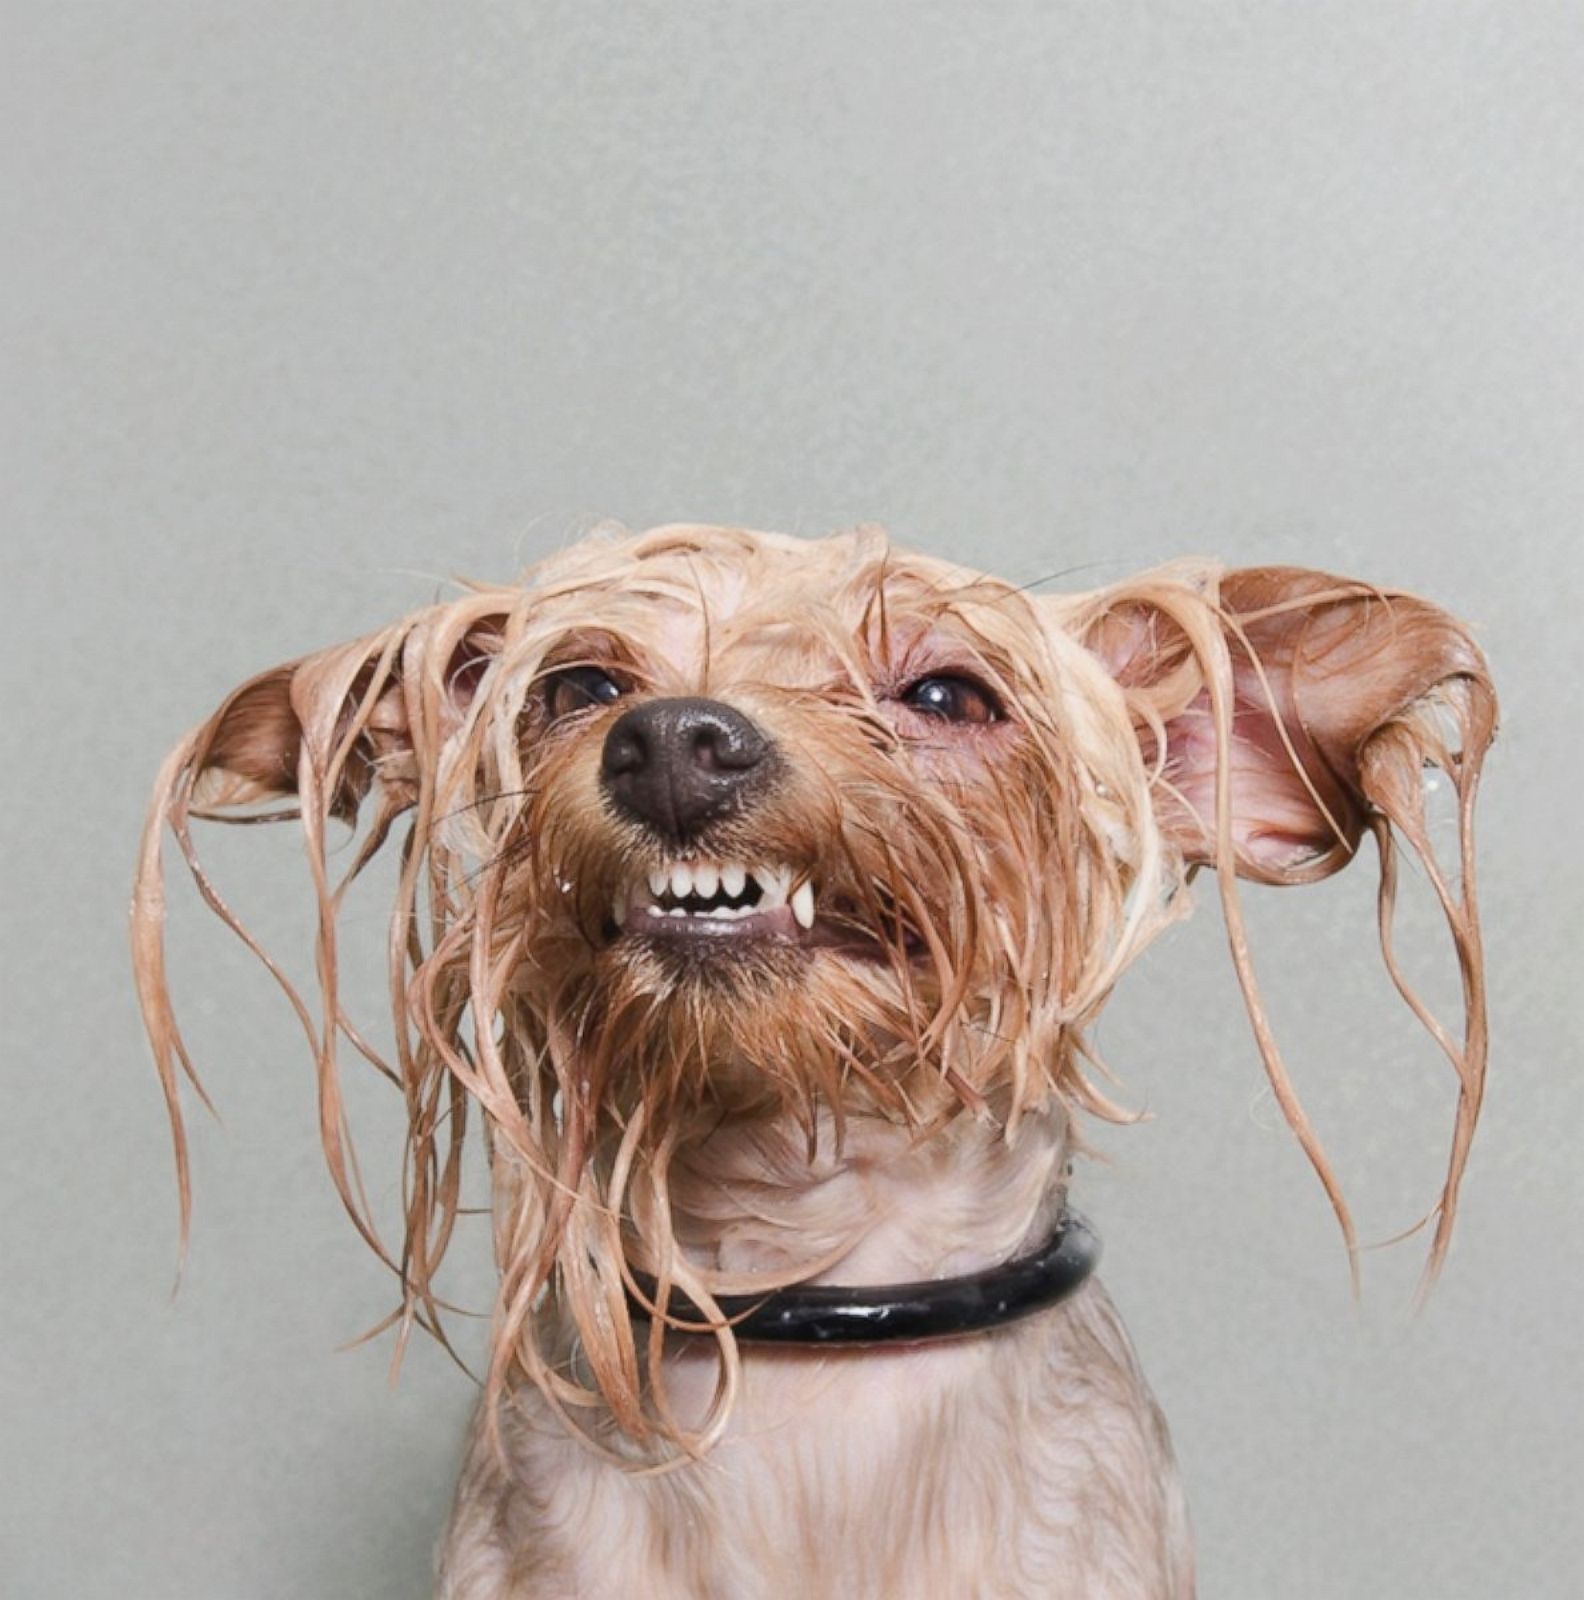 Wet Dog Portraits Photos | Image #3 - ABC News